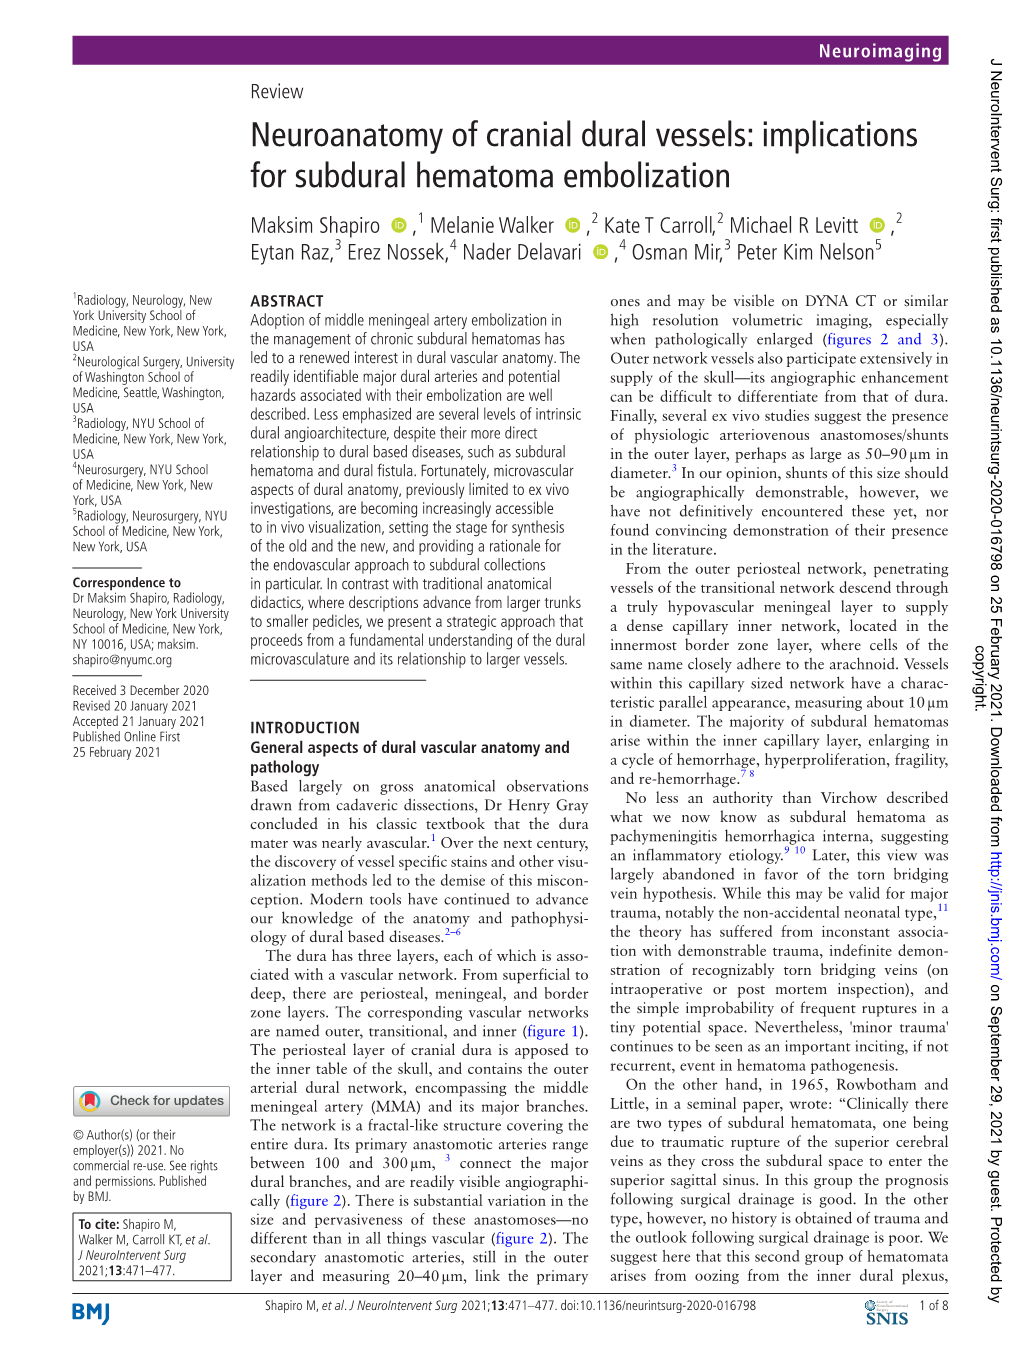 Neuroanatomy of Cranial Dural Vessels: Implications for Subdural Hematoma Embolization